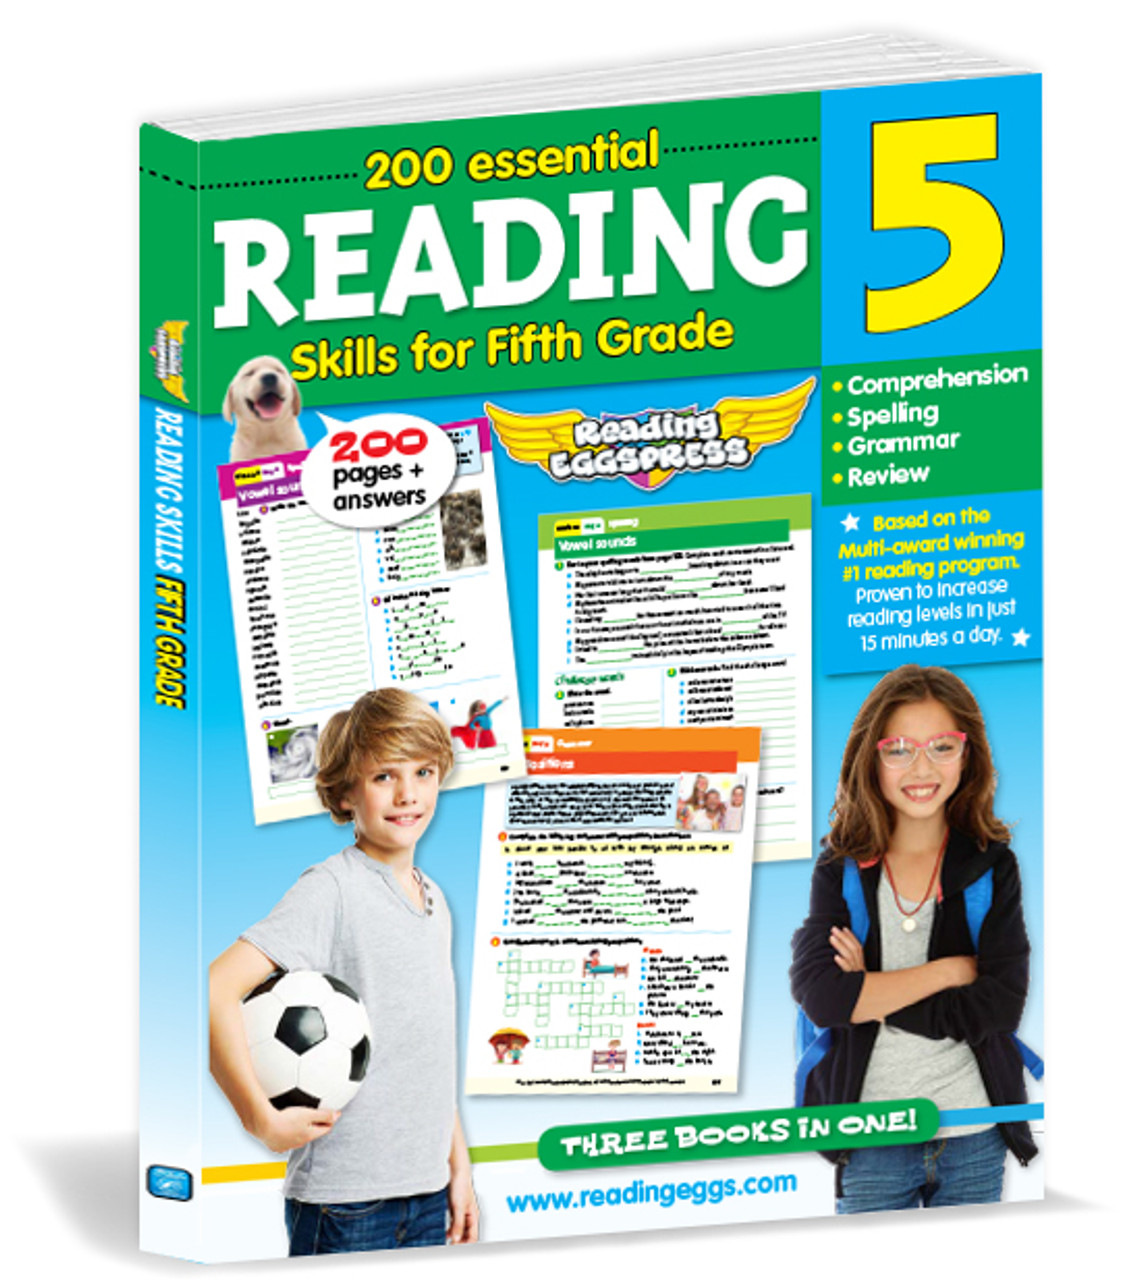 Award-Winning Children's book — 200 Essential Reading Skills for Fifth Grade